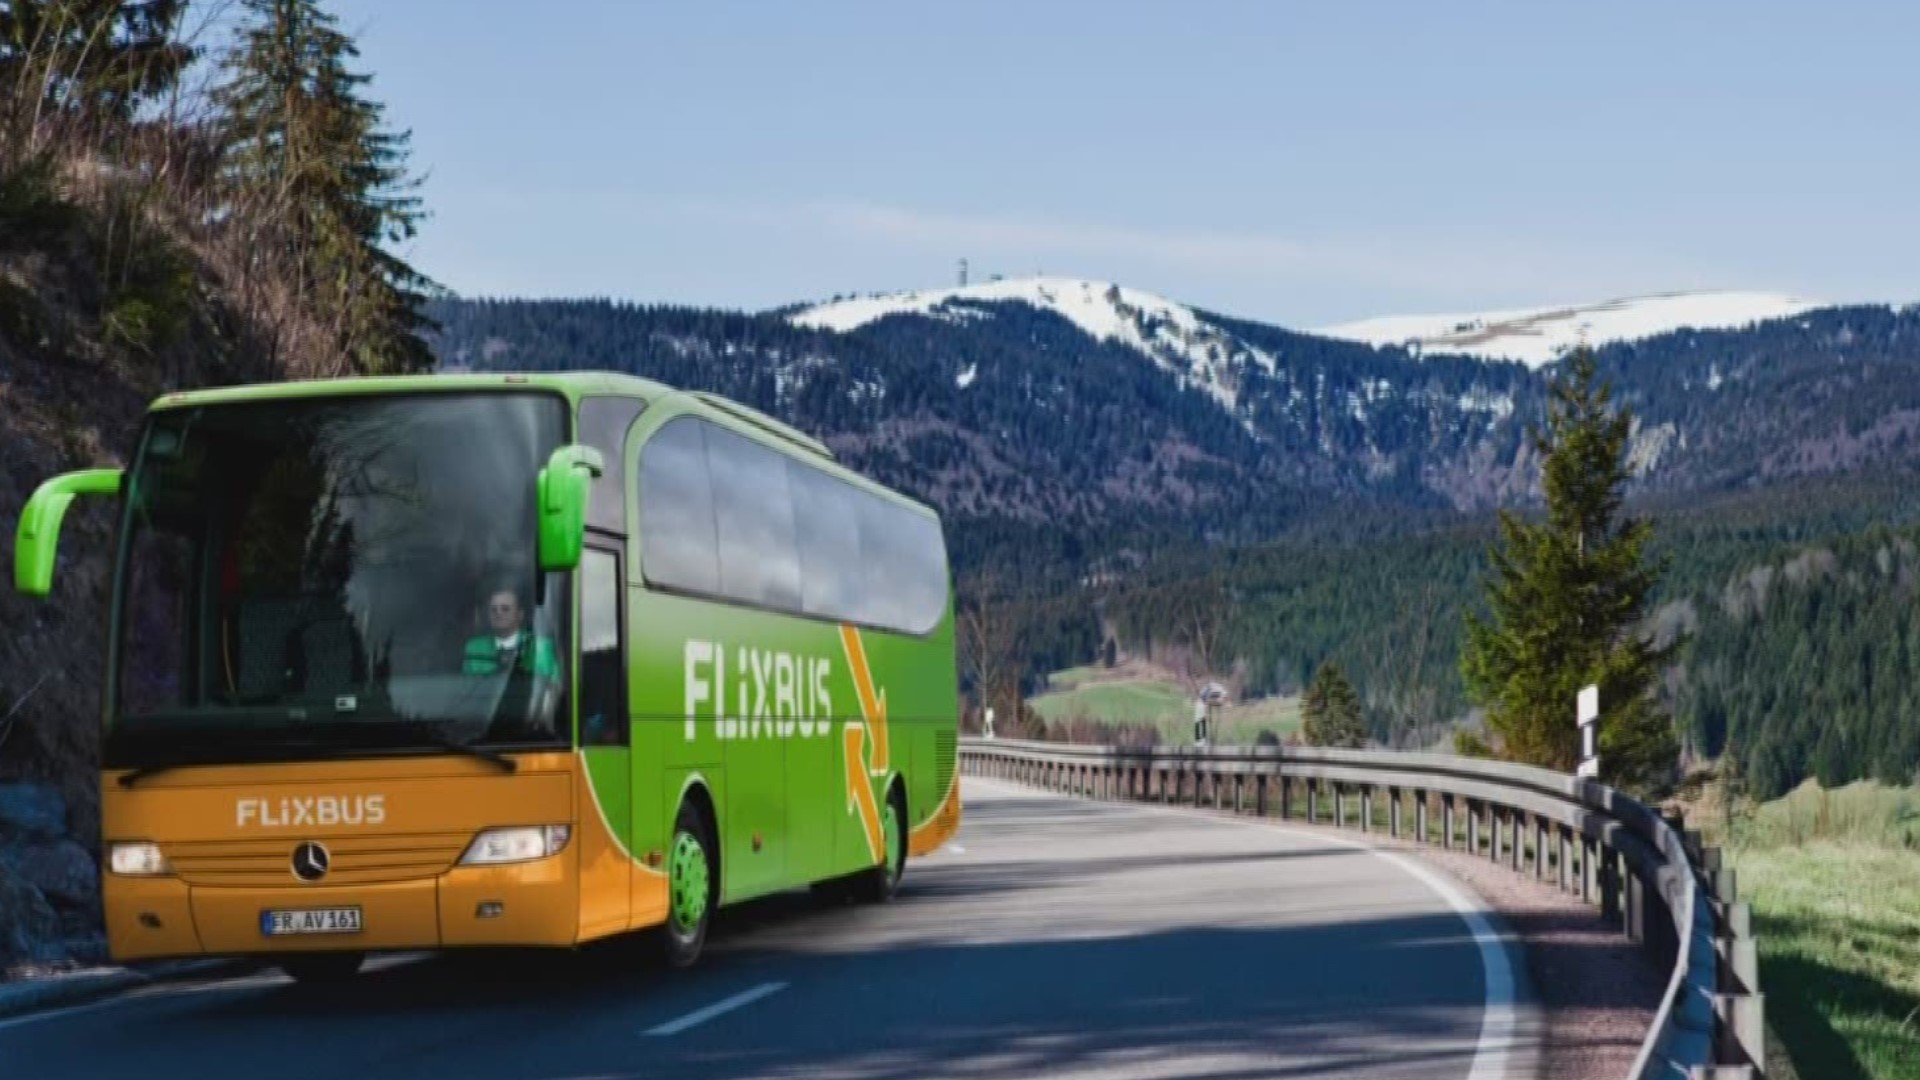 FlixBus will start running trips from Spokane to Seattle on Nov. 21.